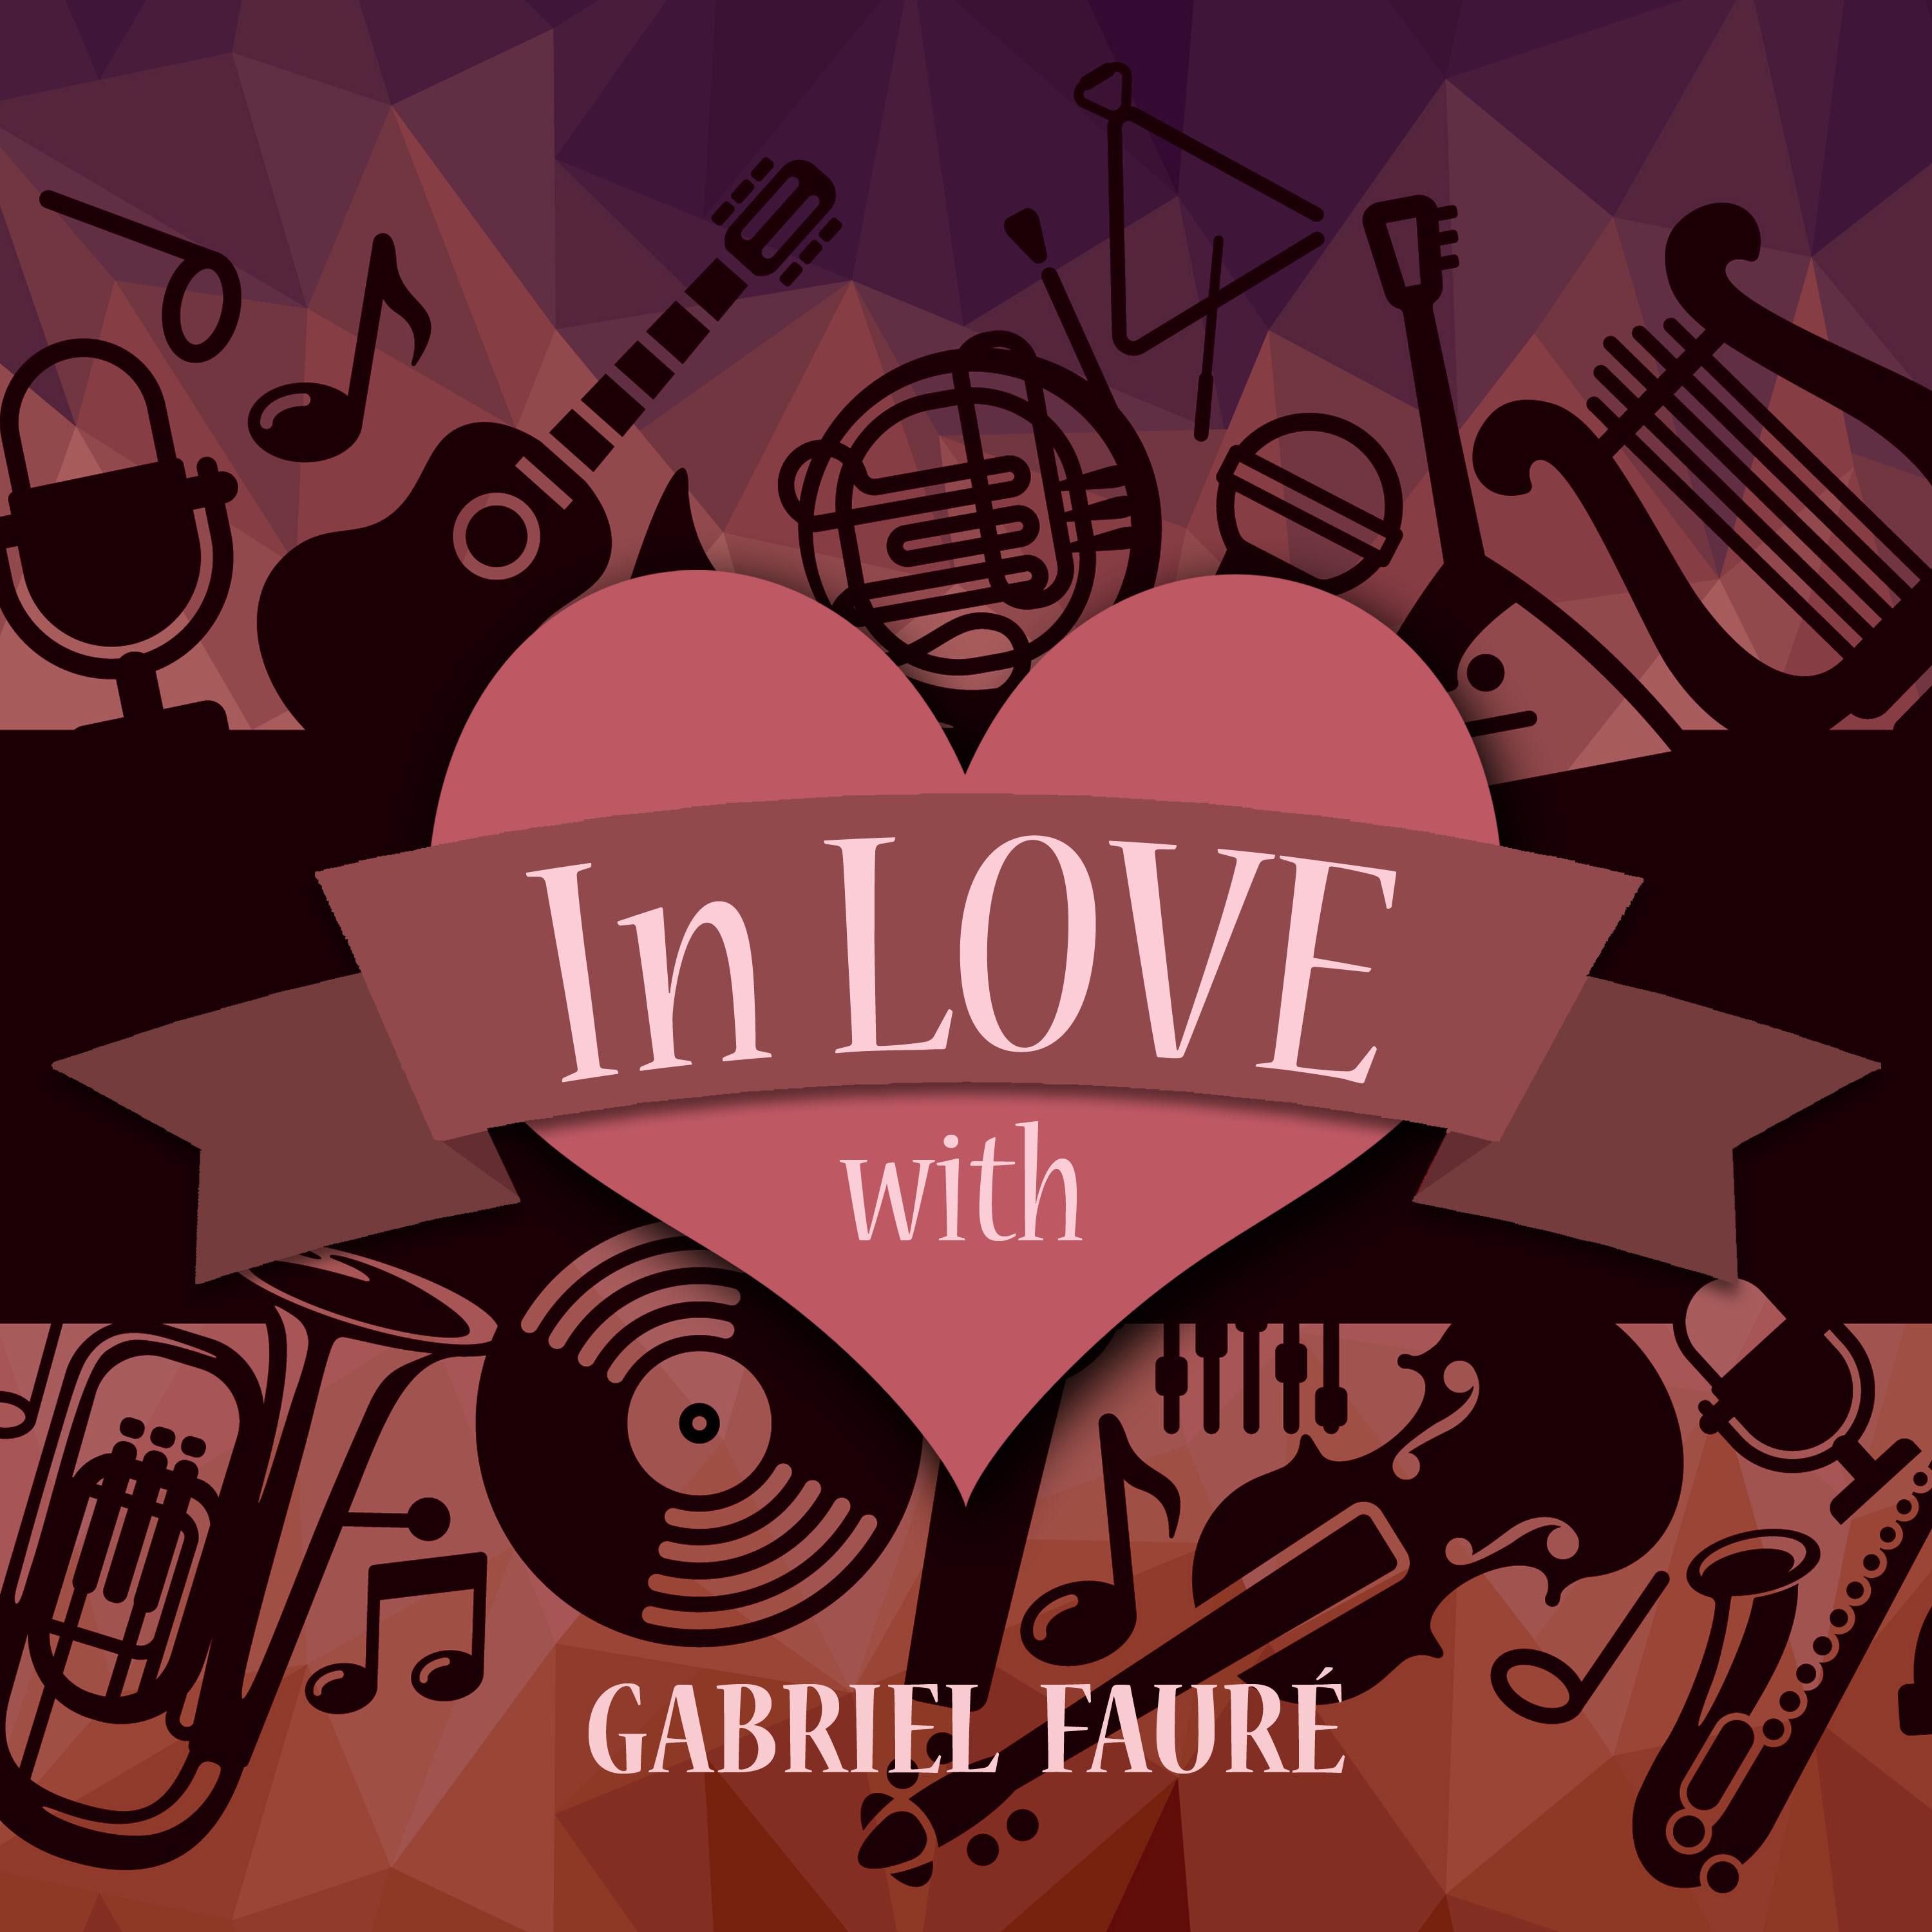 In Love with Gabriel Fauré